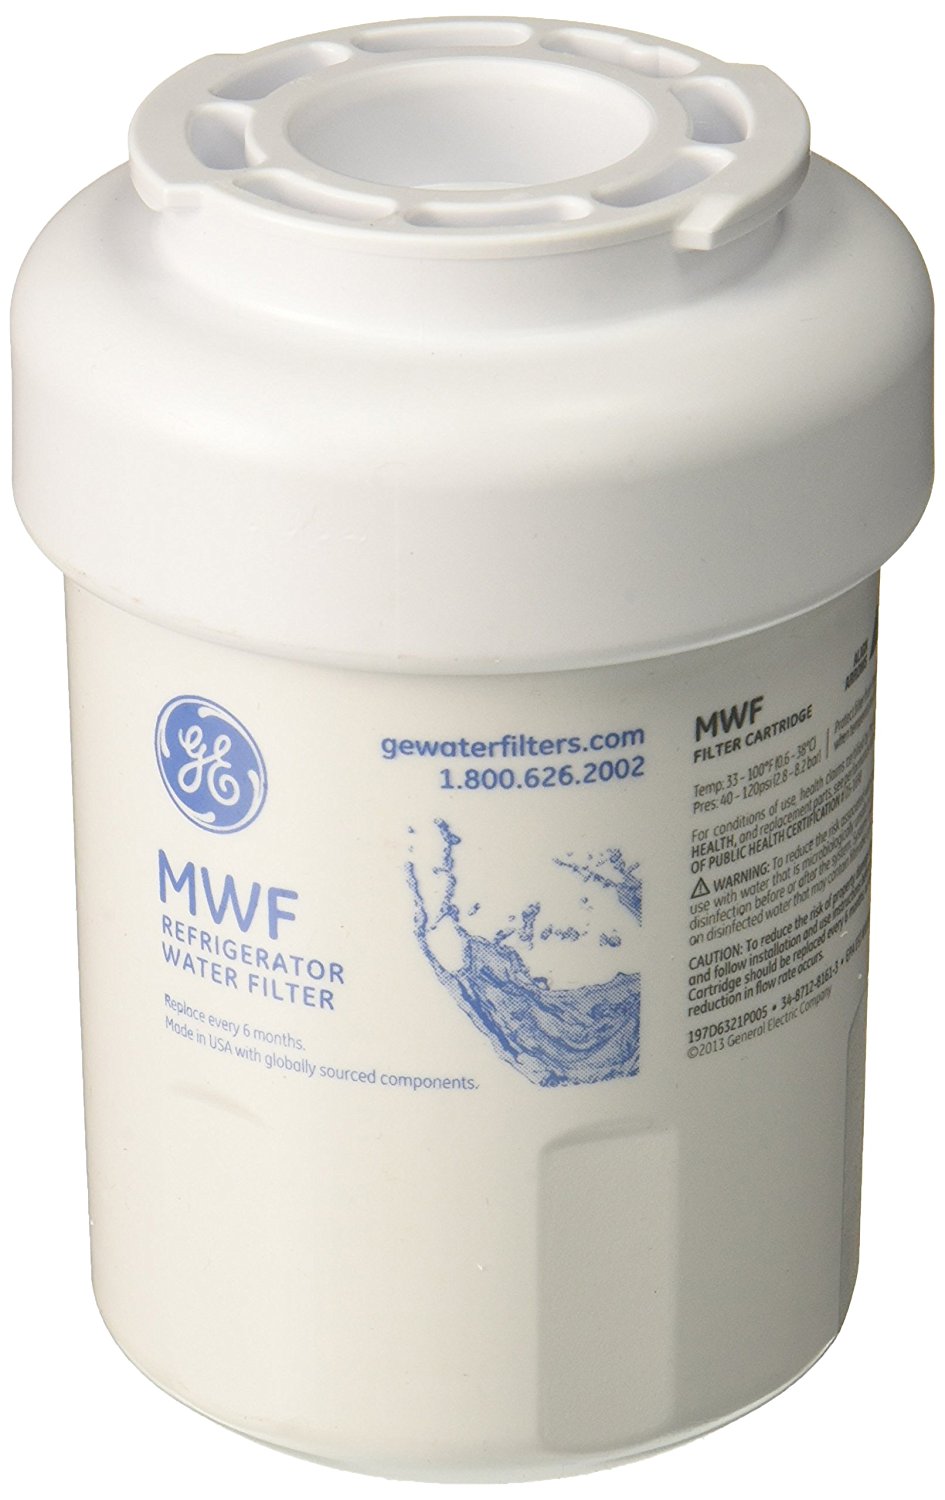 General Electric MWF Refrigerator Water Filter